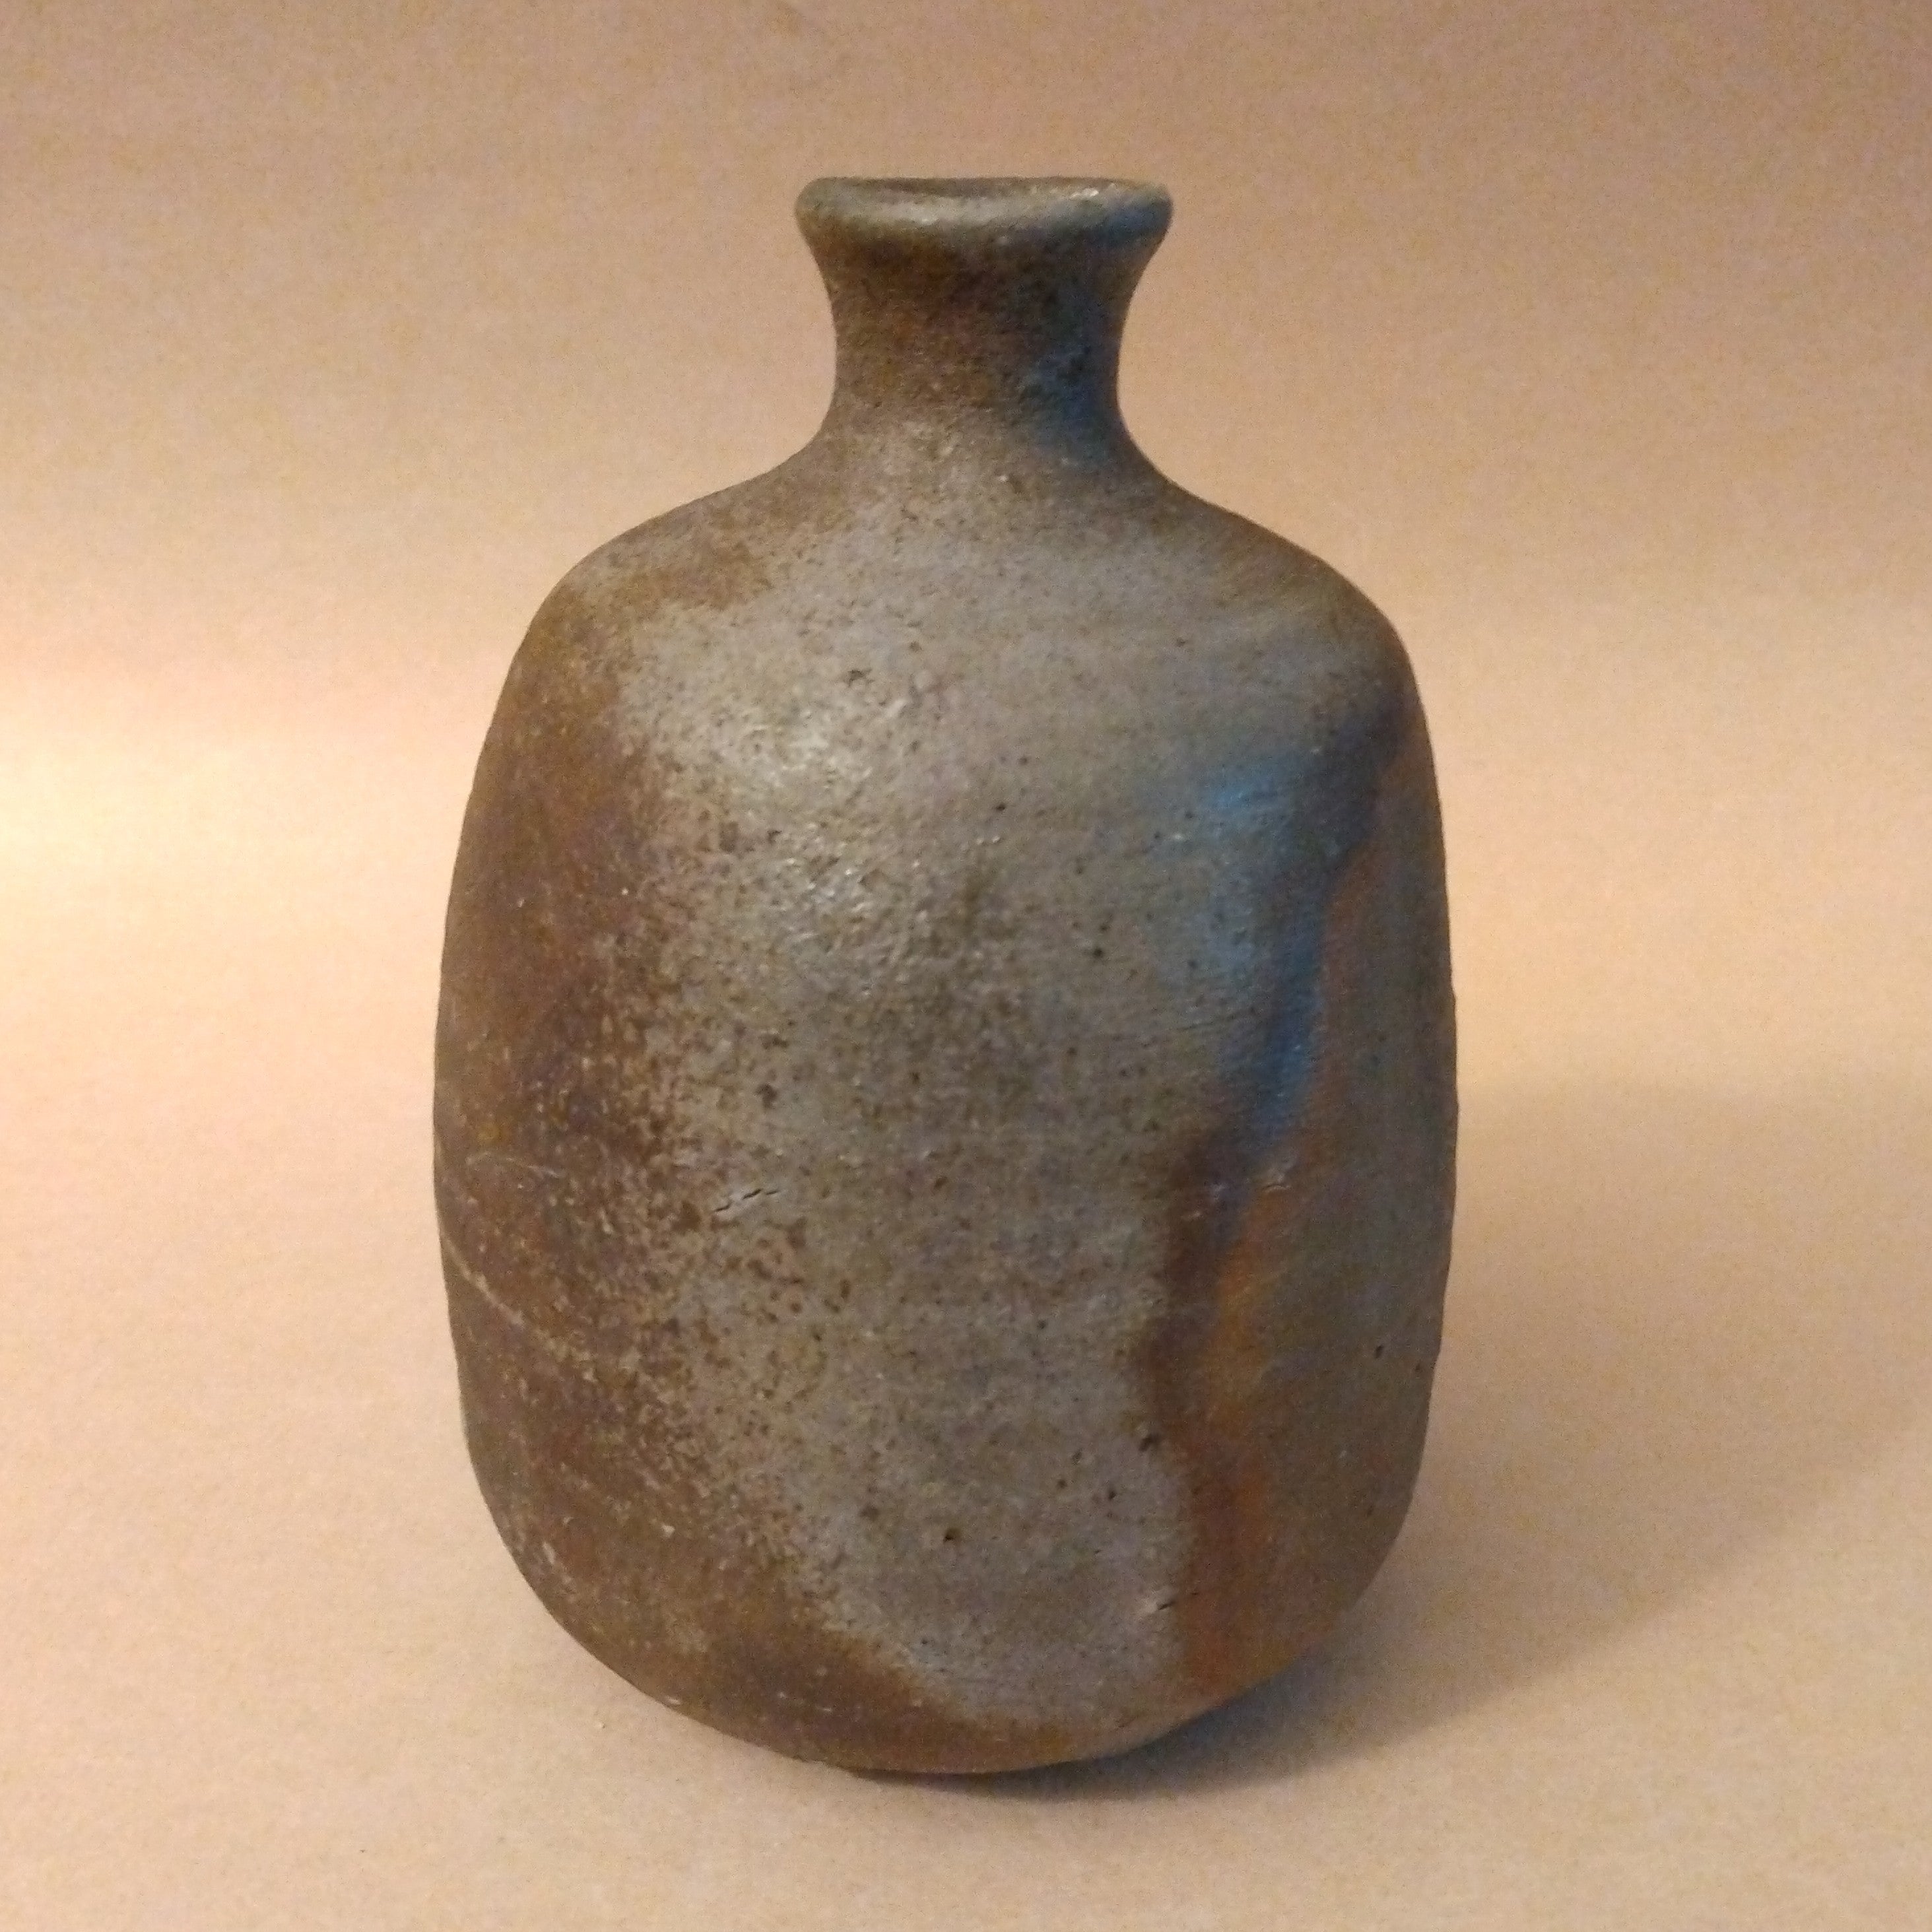 Bizen-yaki Tokkuri (Sake Bottle), attributed to Motoyama Yaeno; Thiel Collection